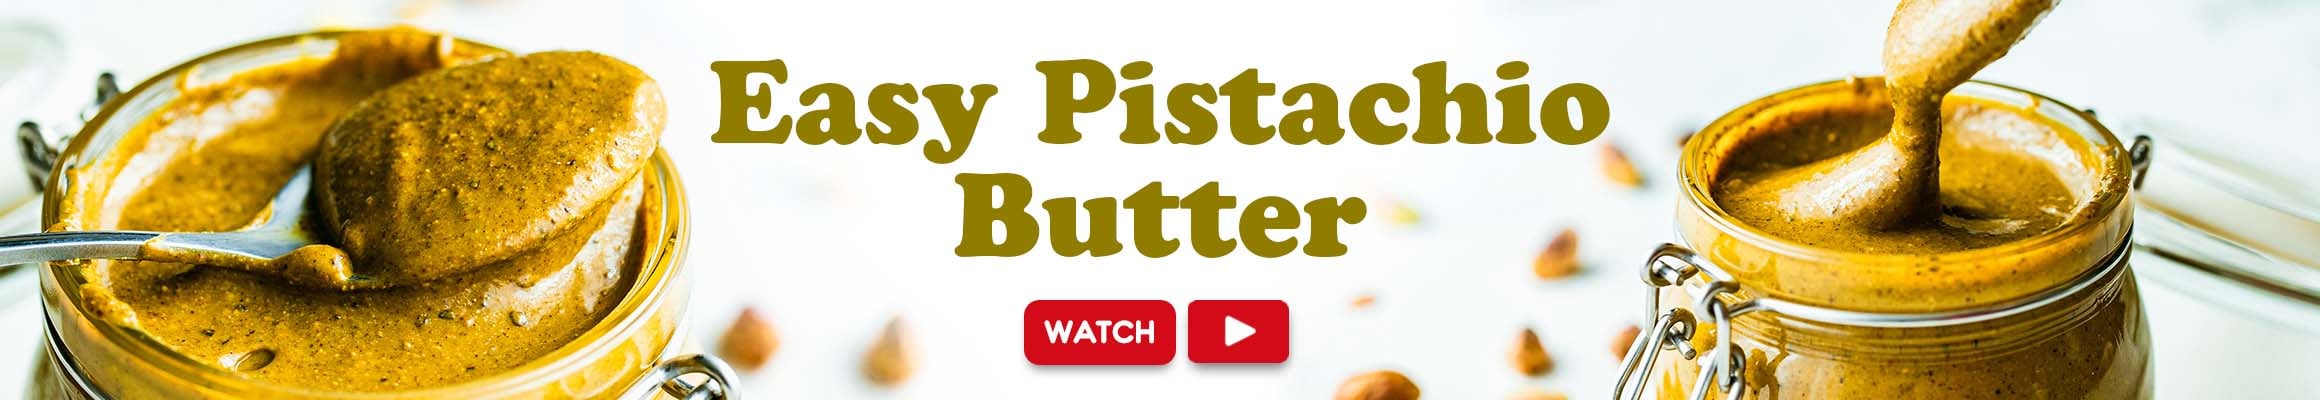 homemade-pistachio-butter-new-recipe-web